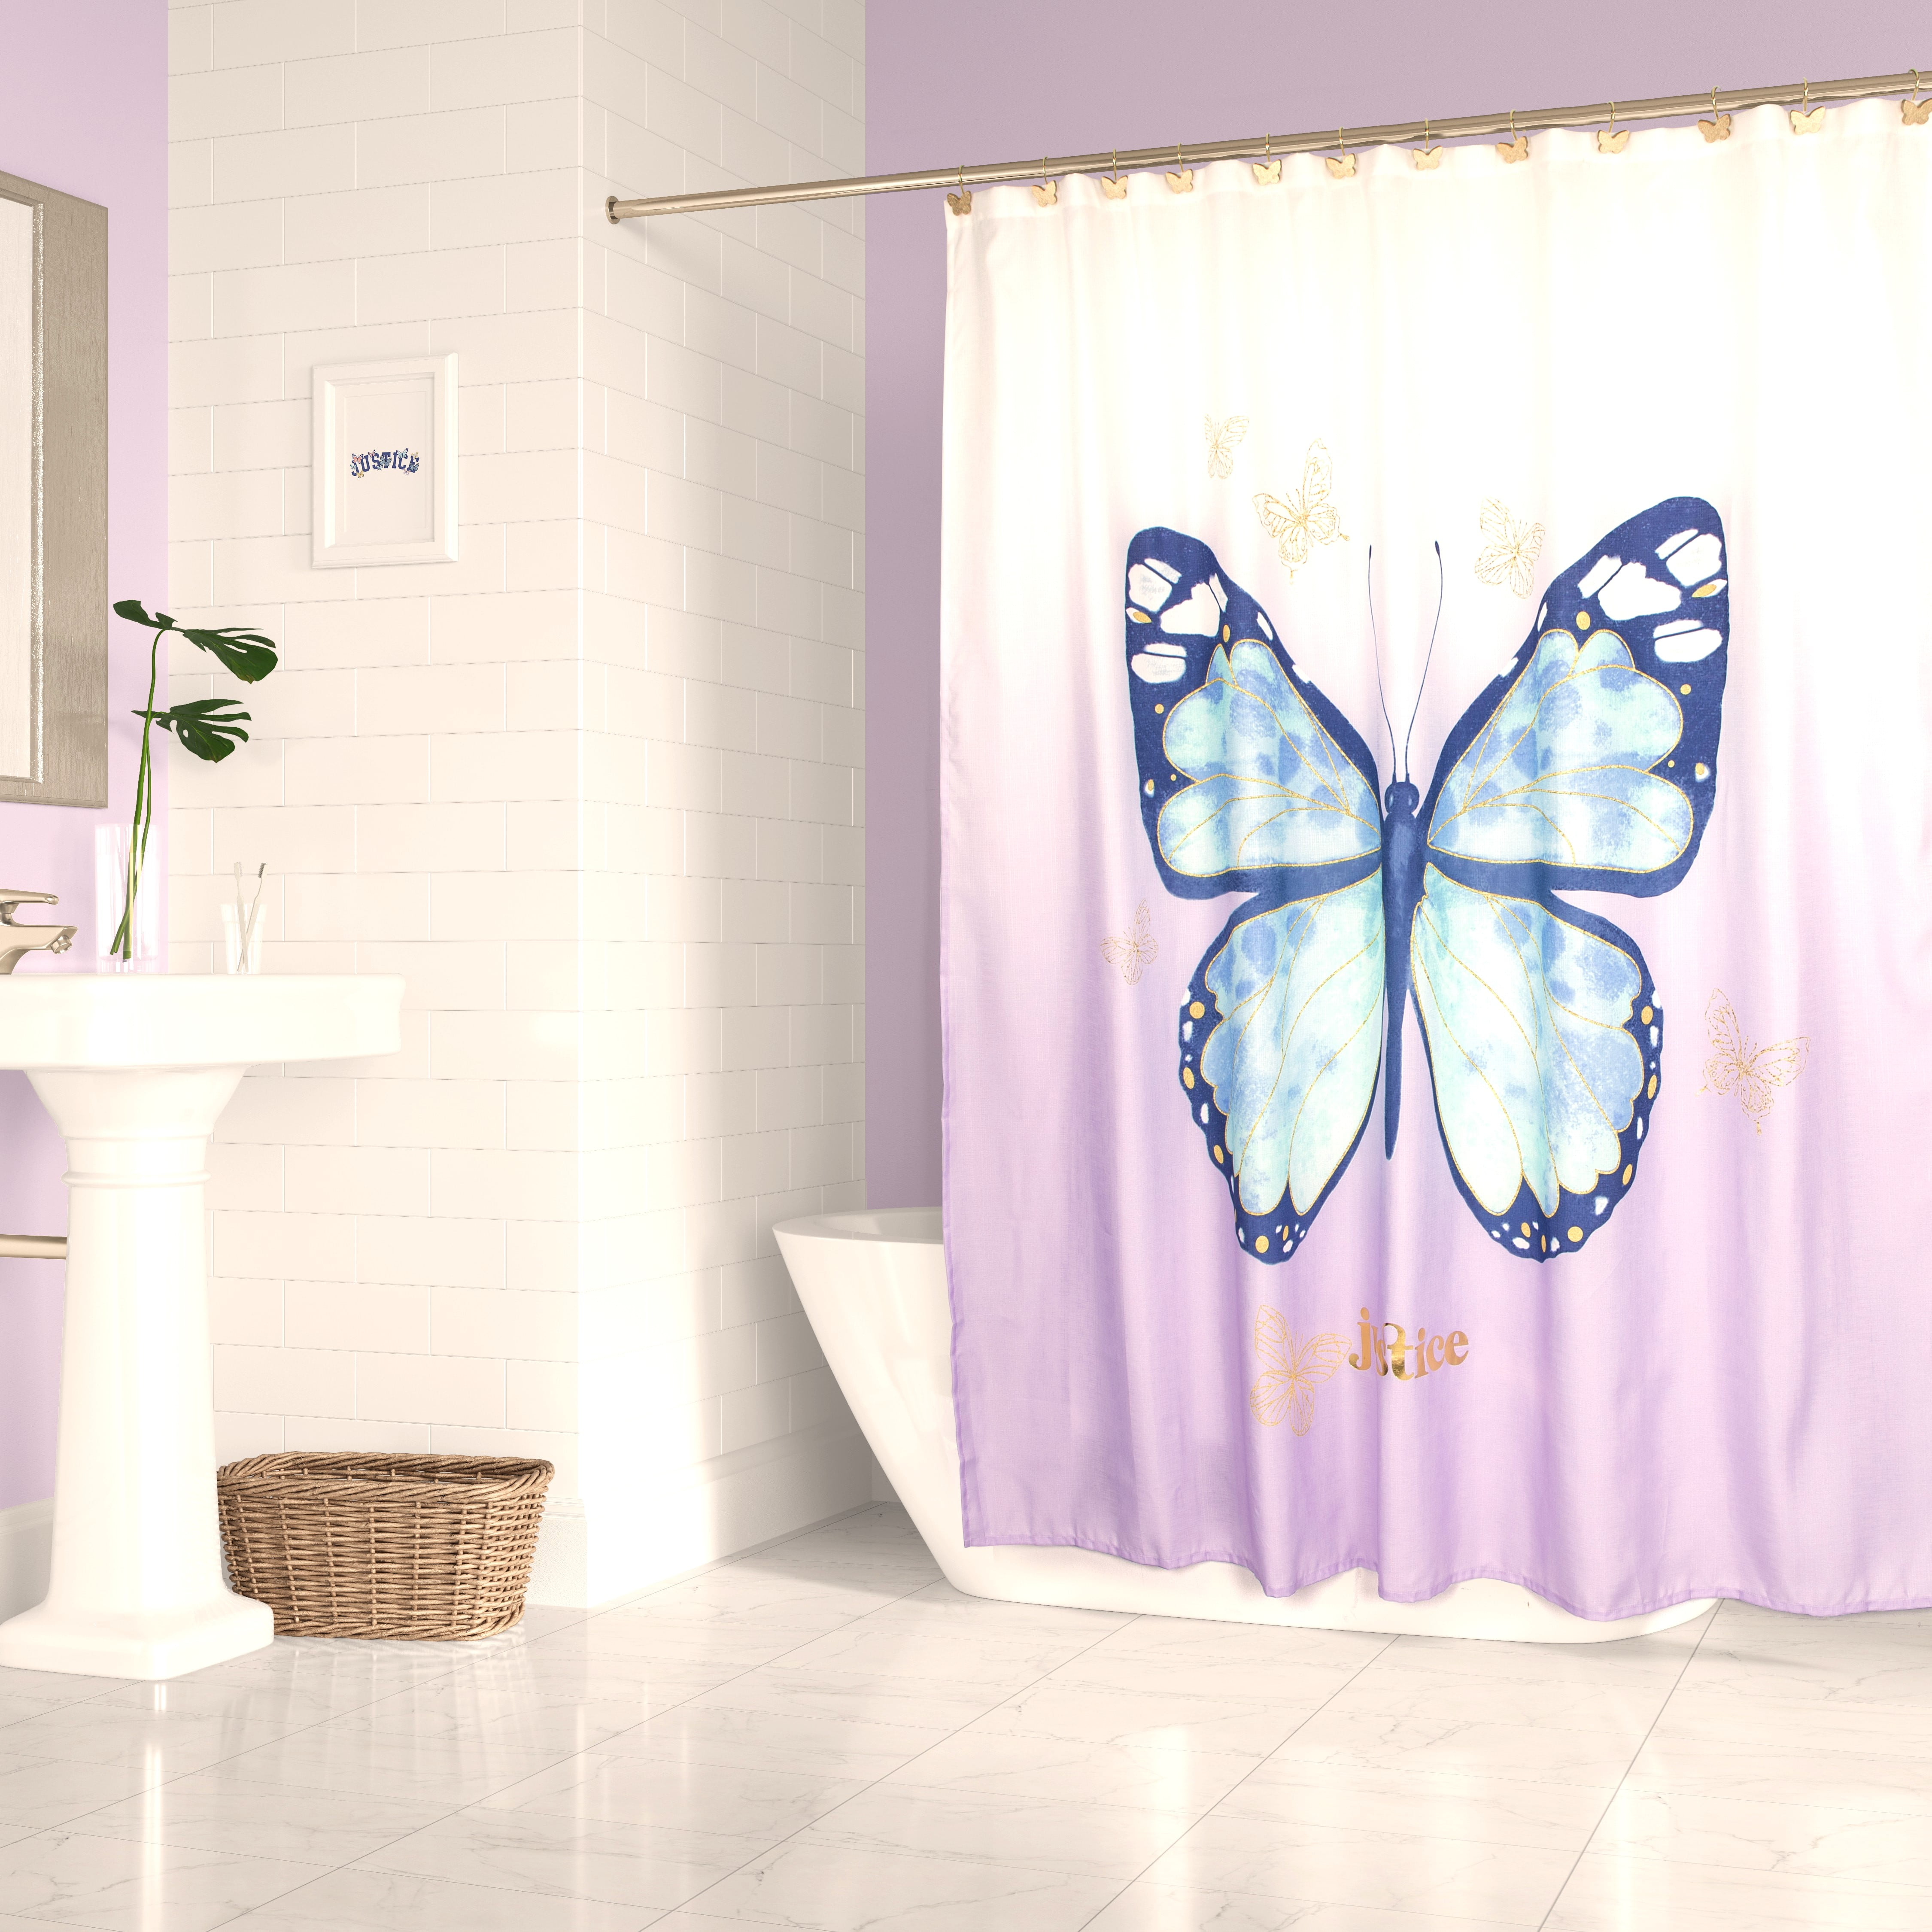 Shower Curtain Cat Design Bathroom Liner Fabric Sheer Panel with Hooks Set 